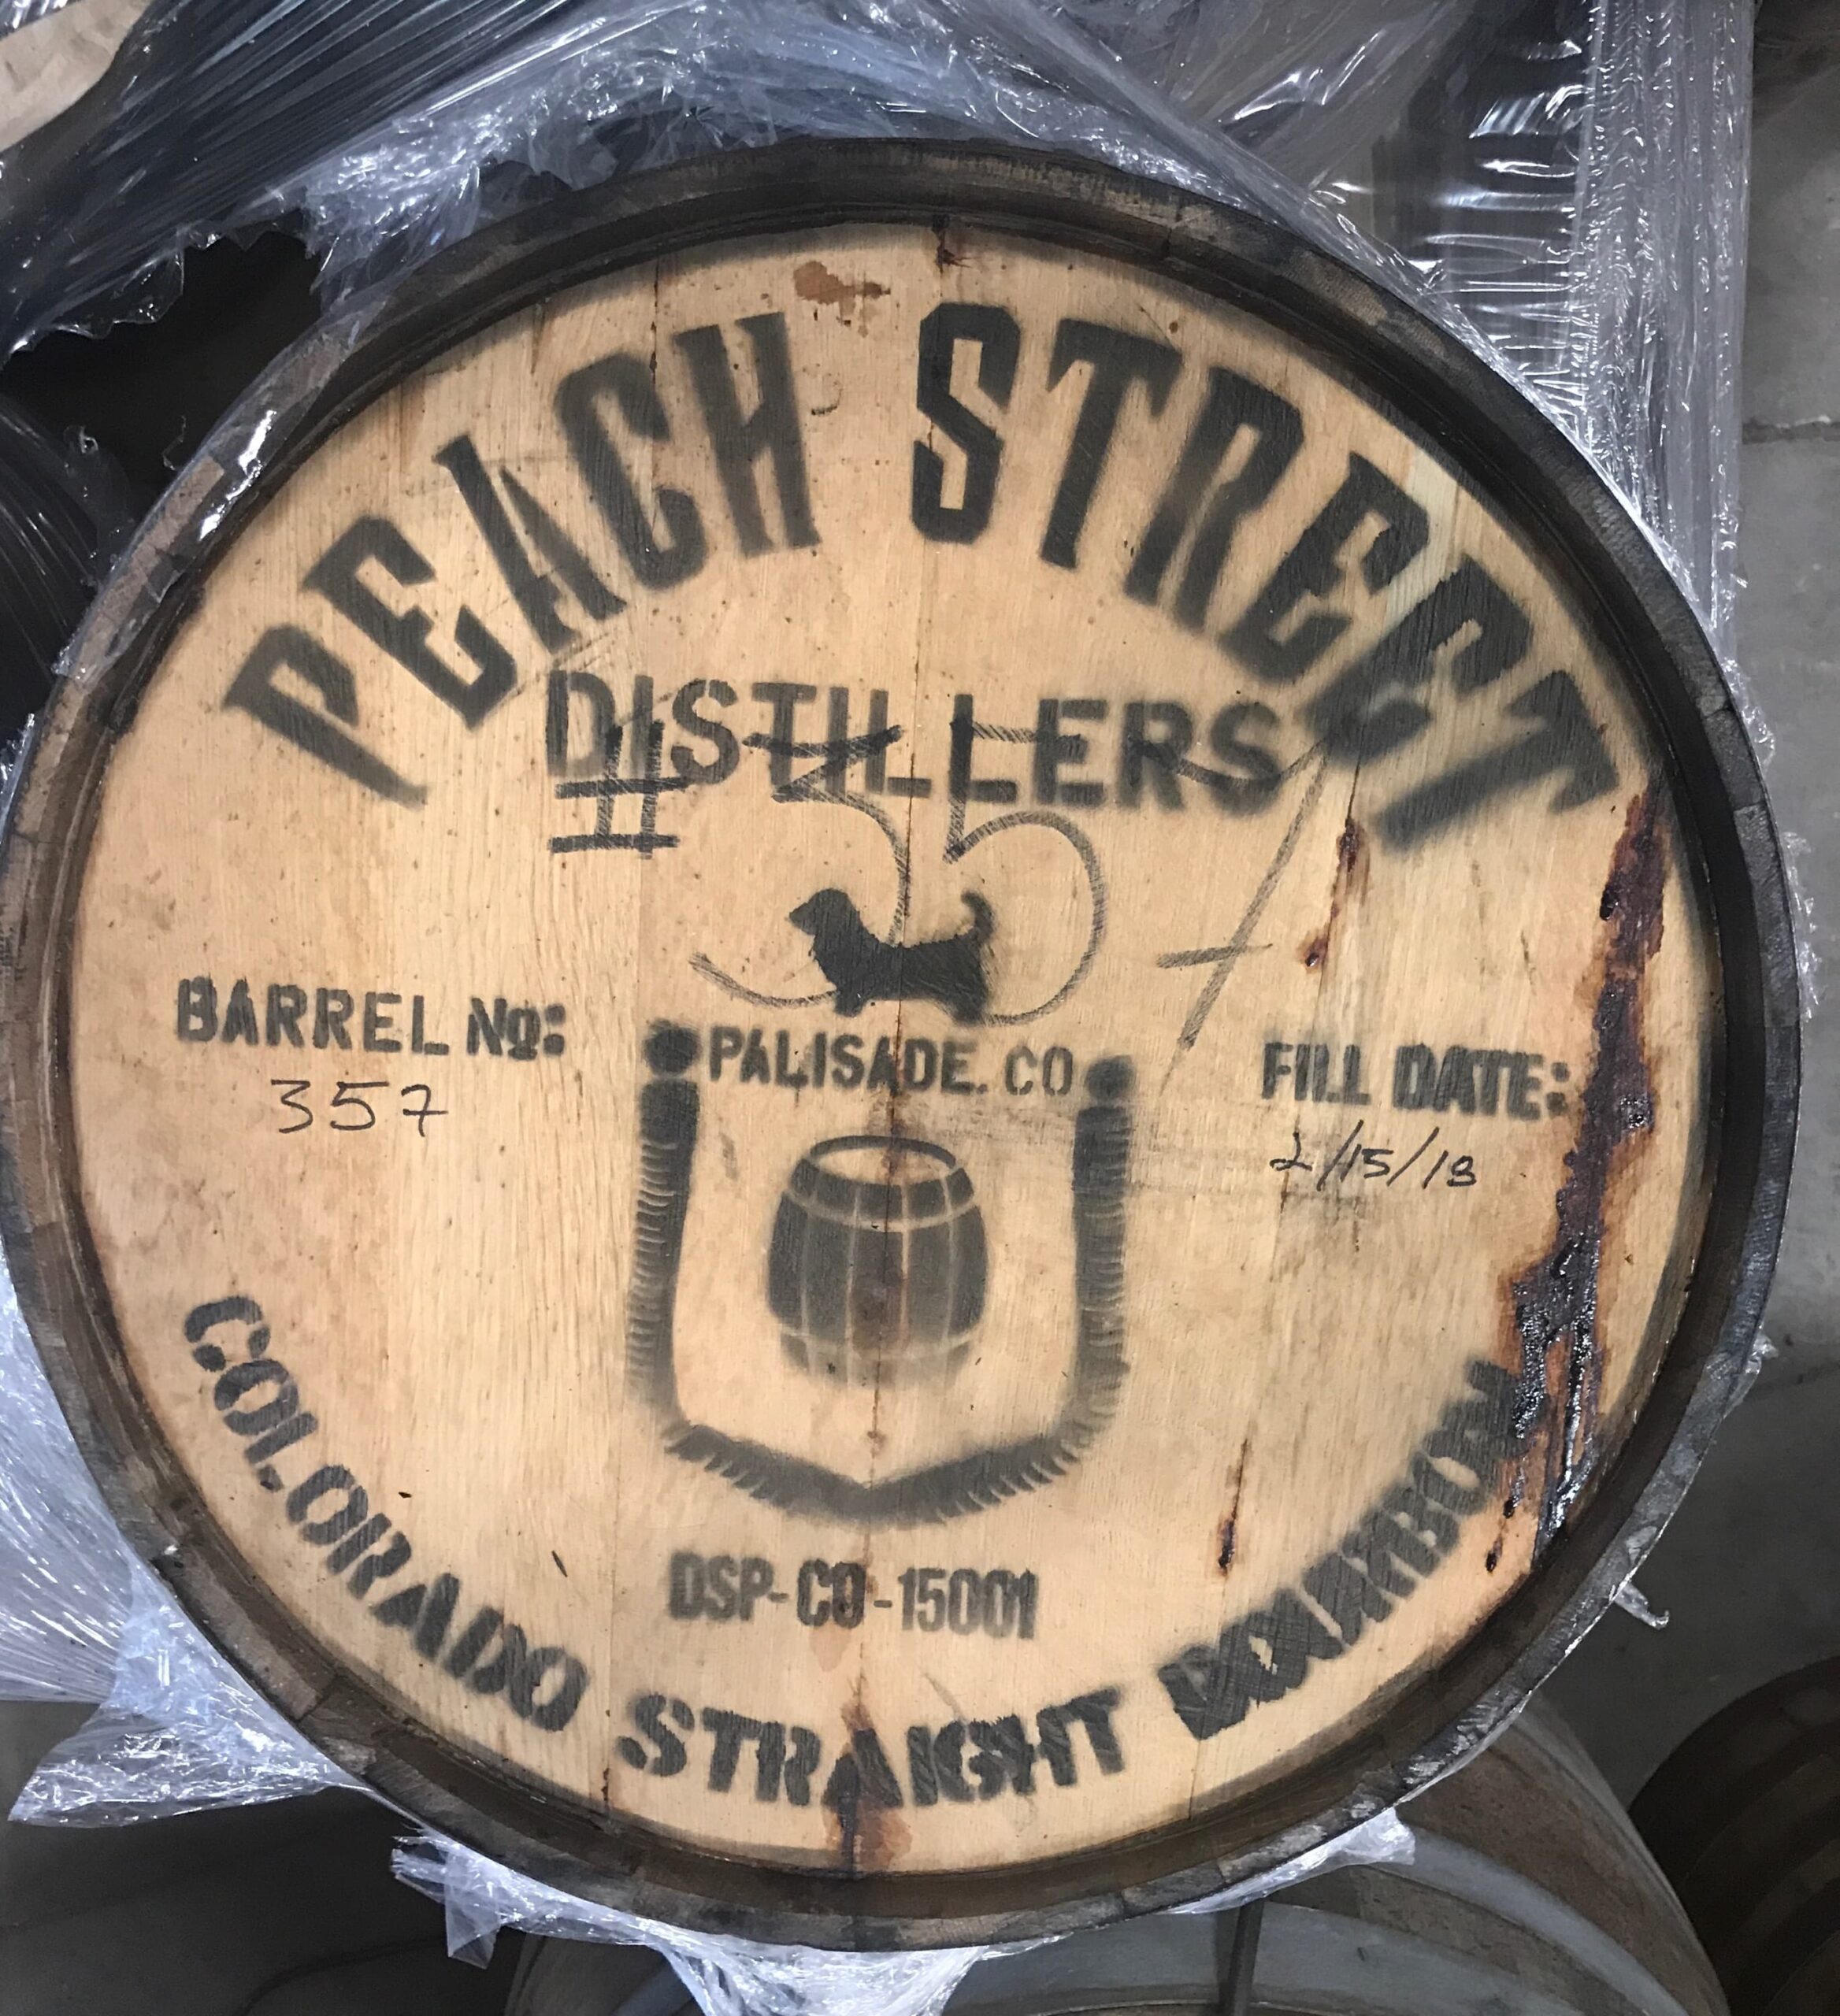 Bourbon  Peach Street Distillers